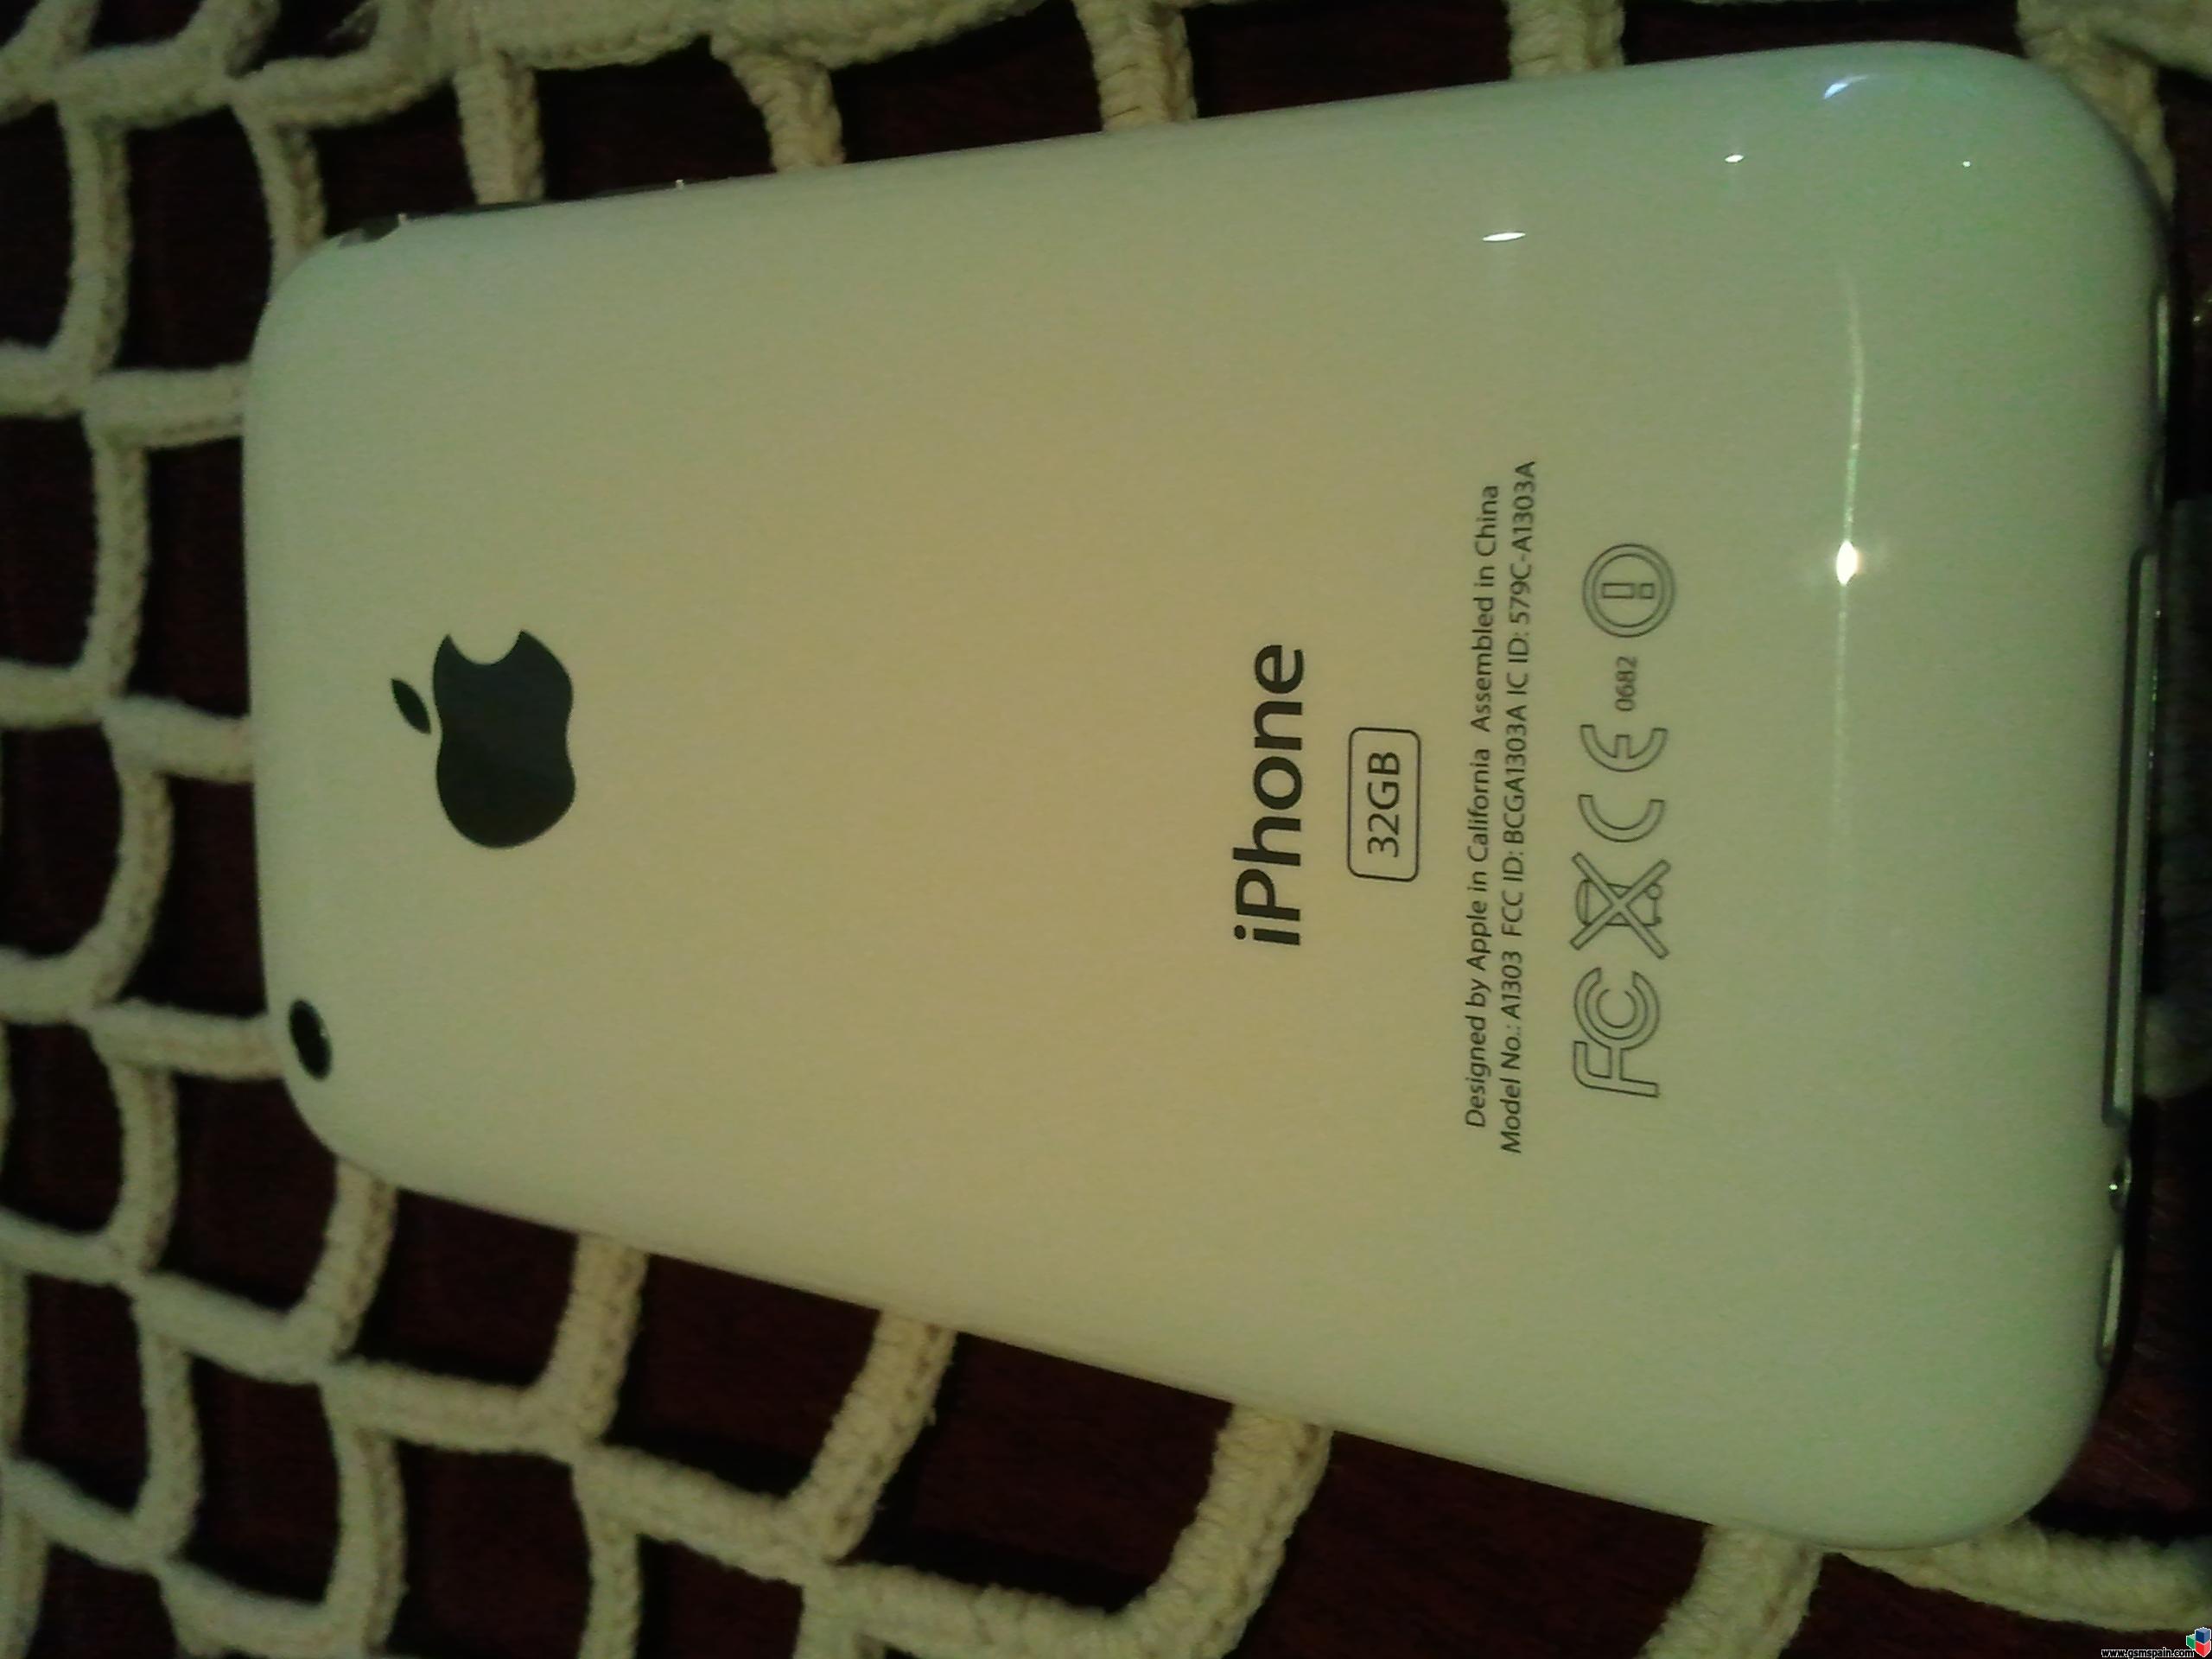 [VENDO] IPhone 3GS 32gb blanco movistar +garantia apple nuevo!!!!!!!!!!!!!